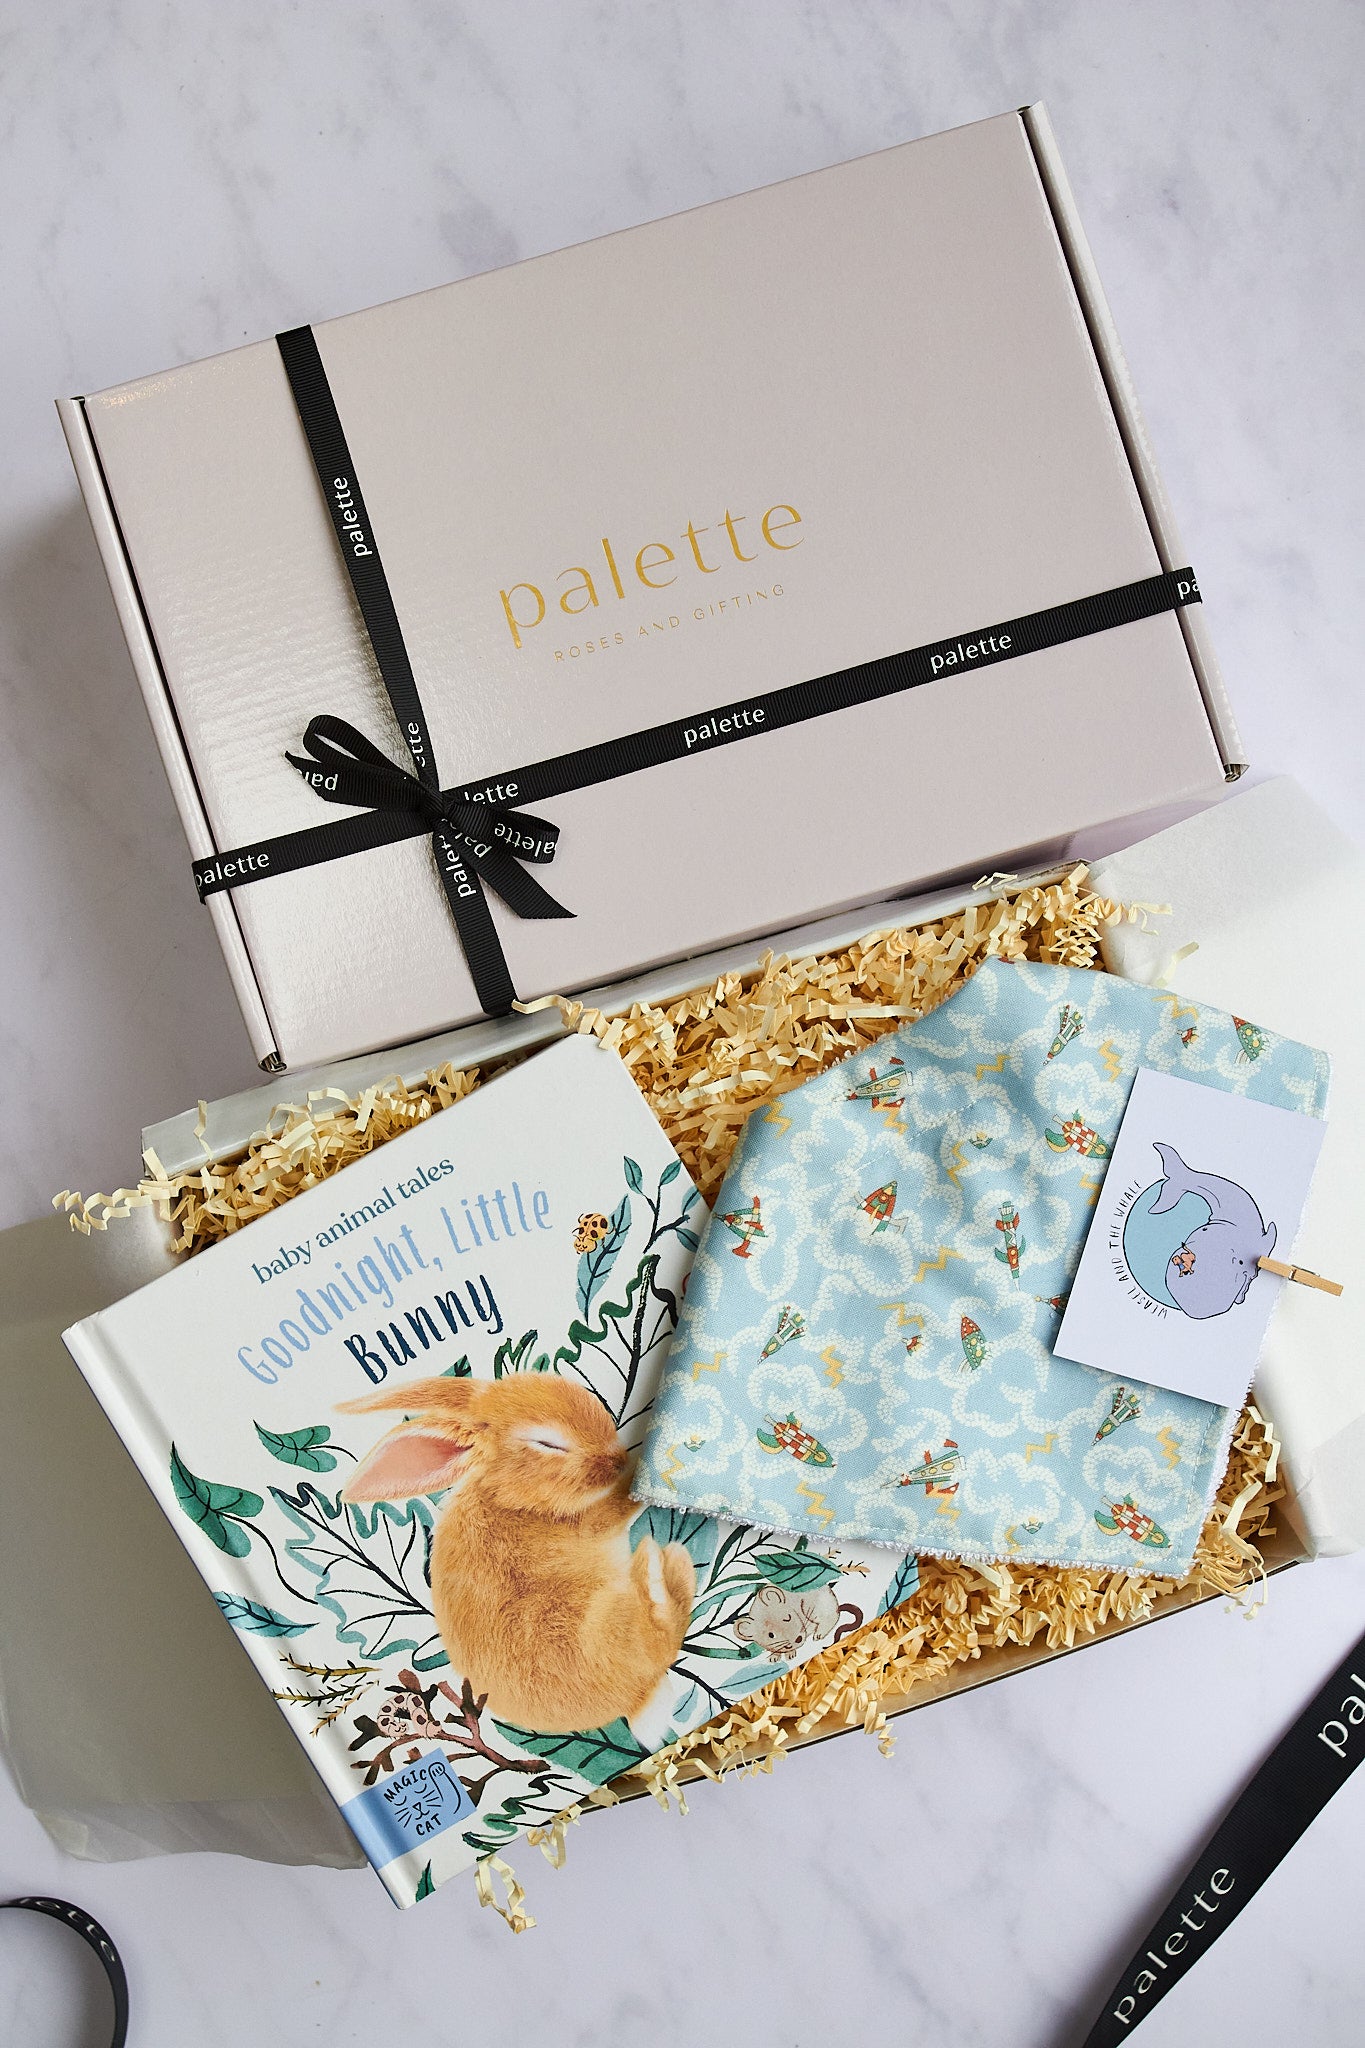 'NEW BABY' PALETTE GIFT BOX